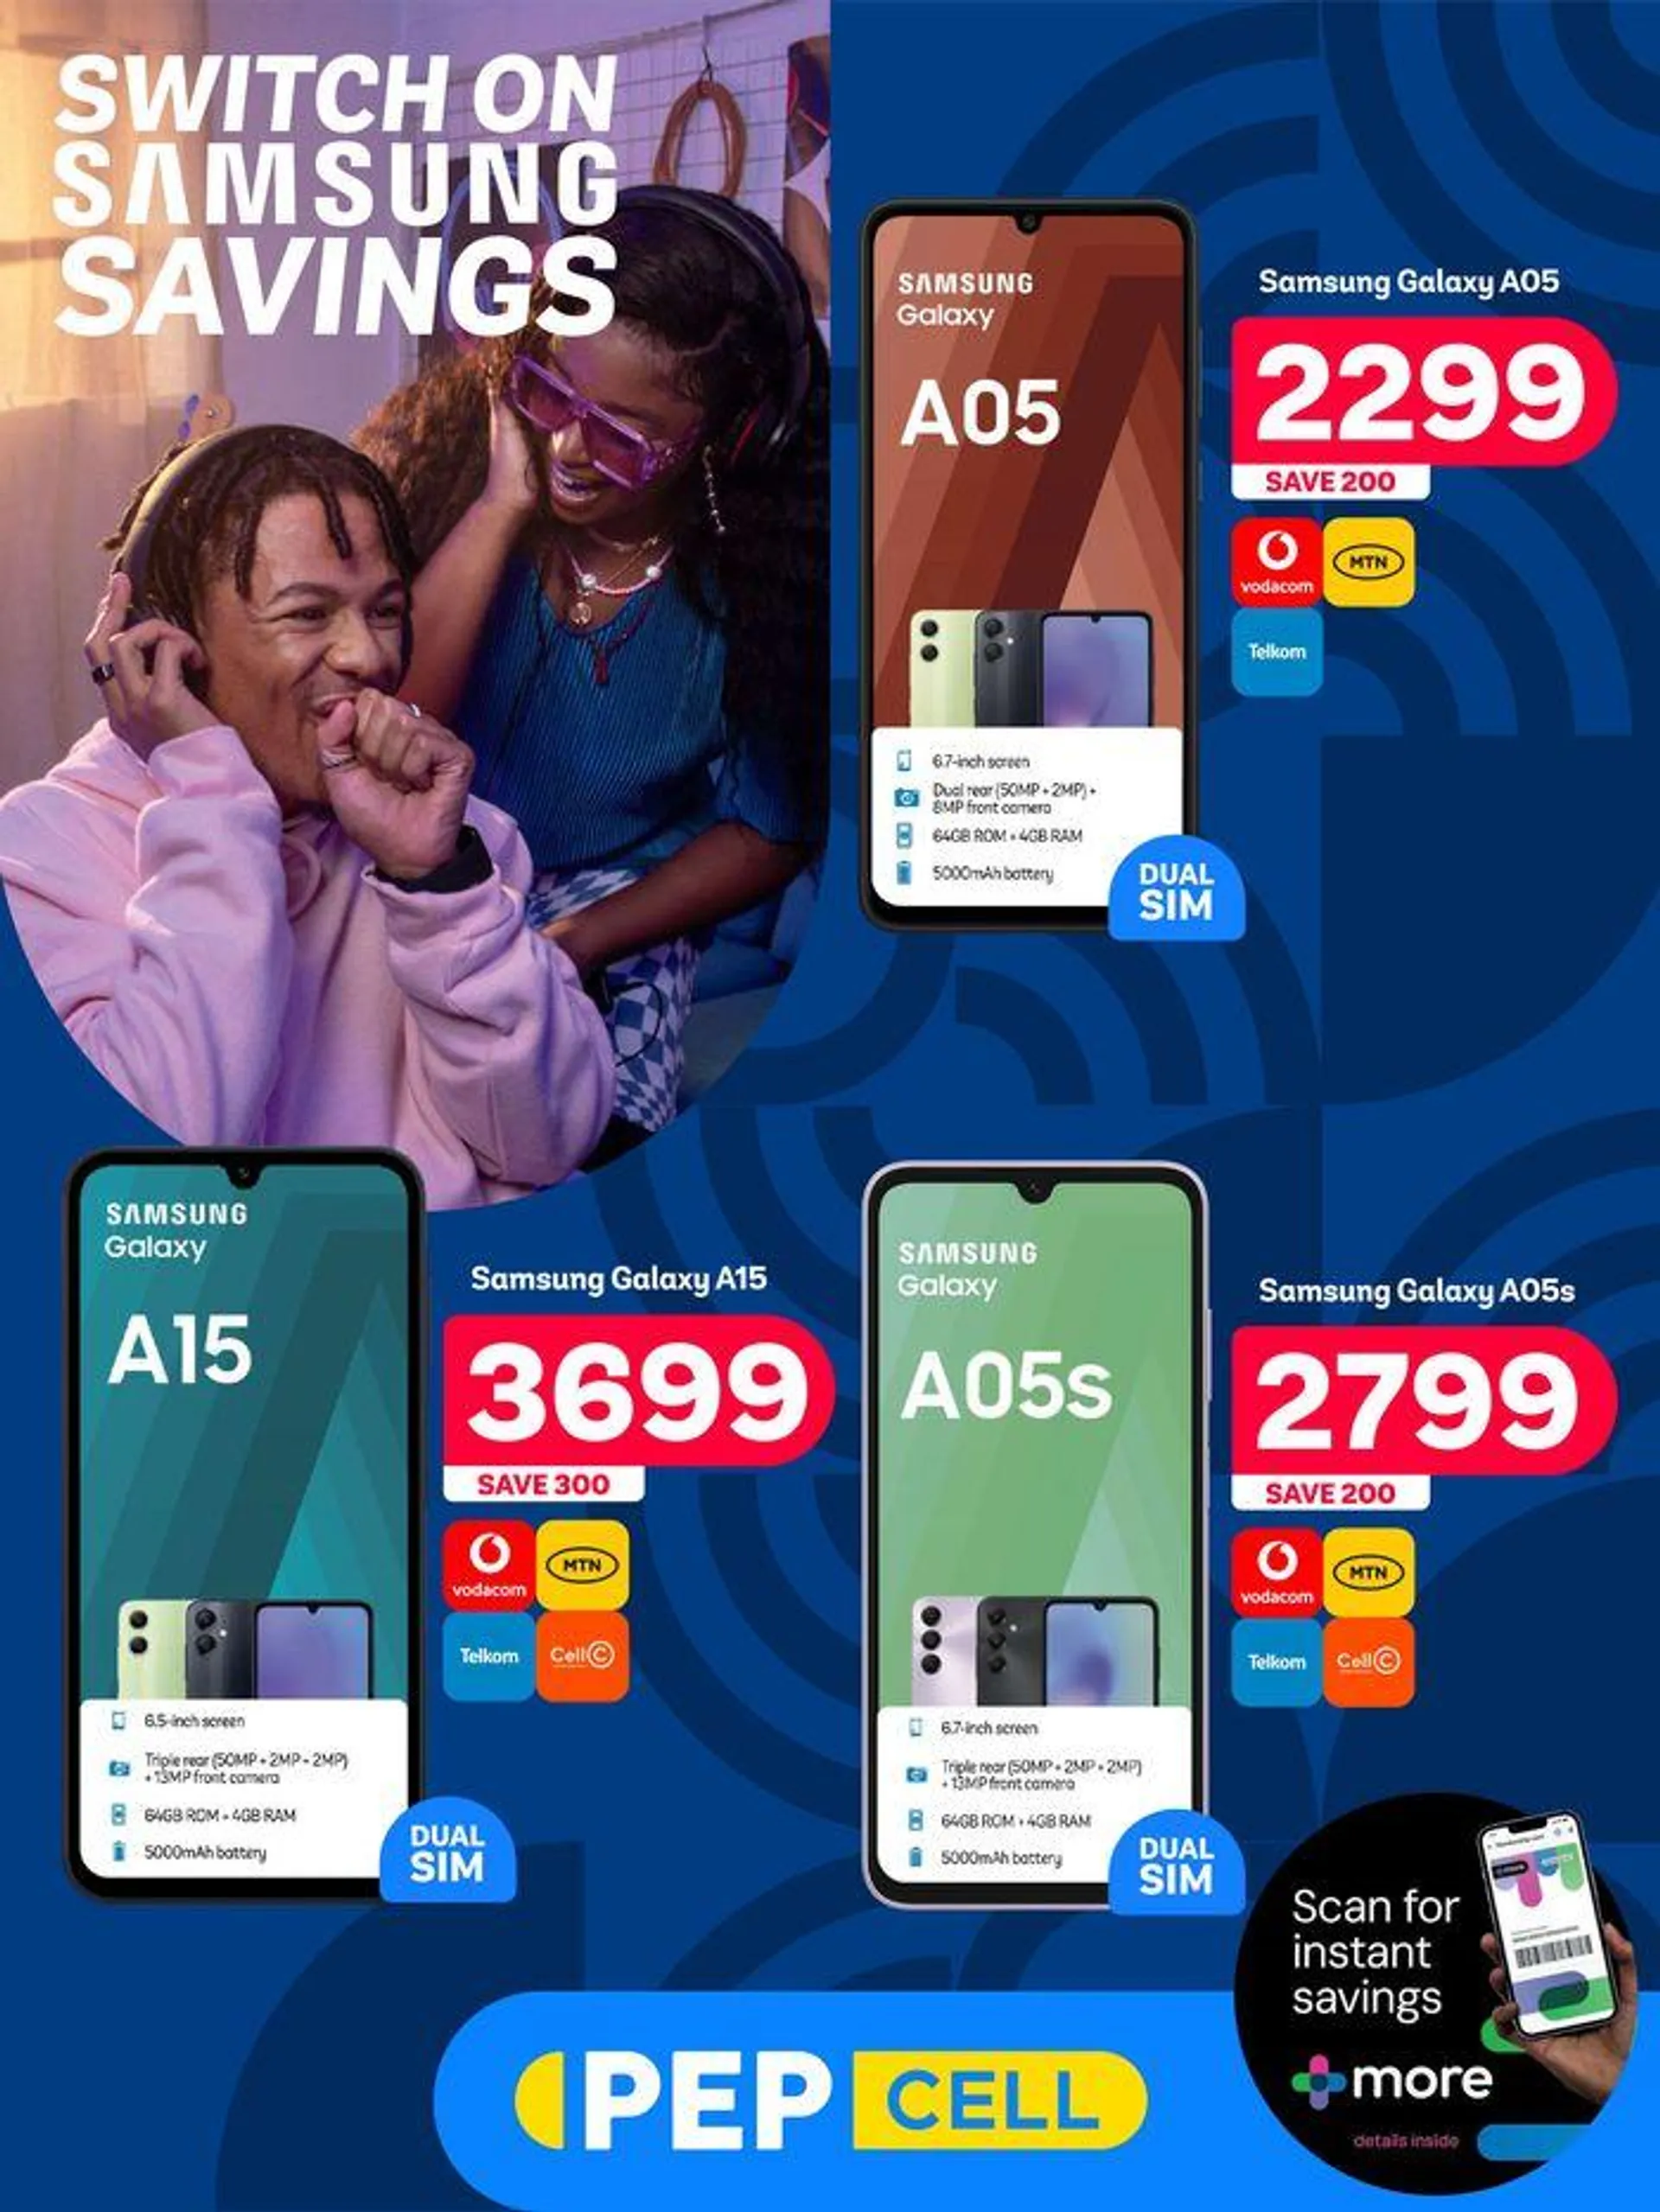 Switch on Samsung savings - 1